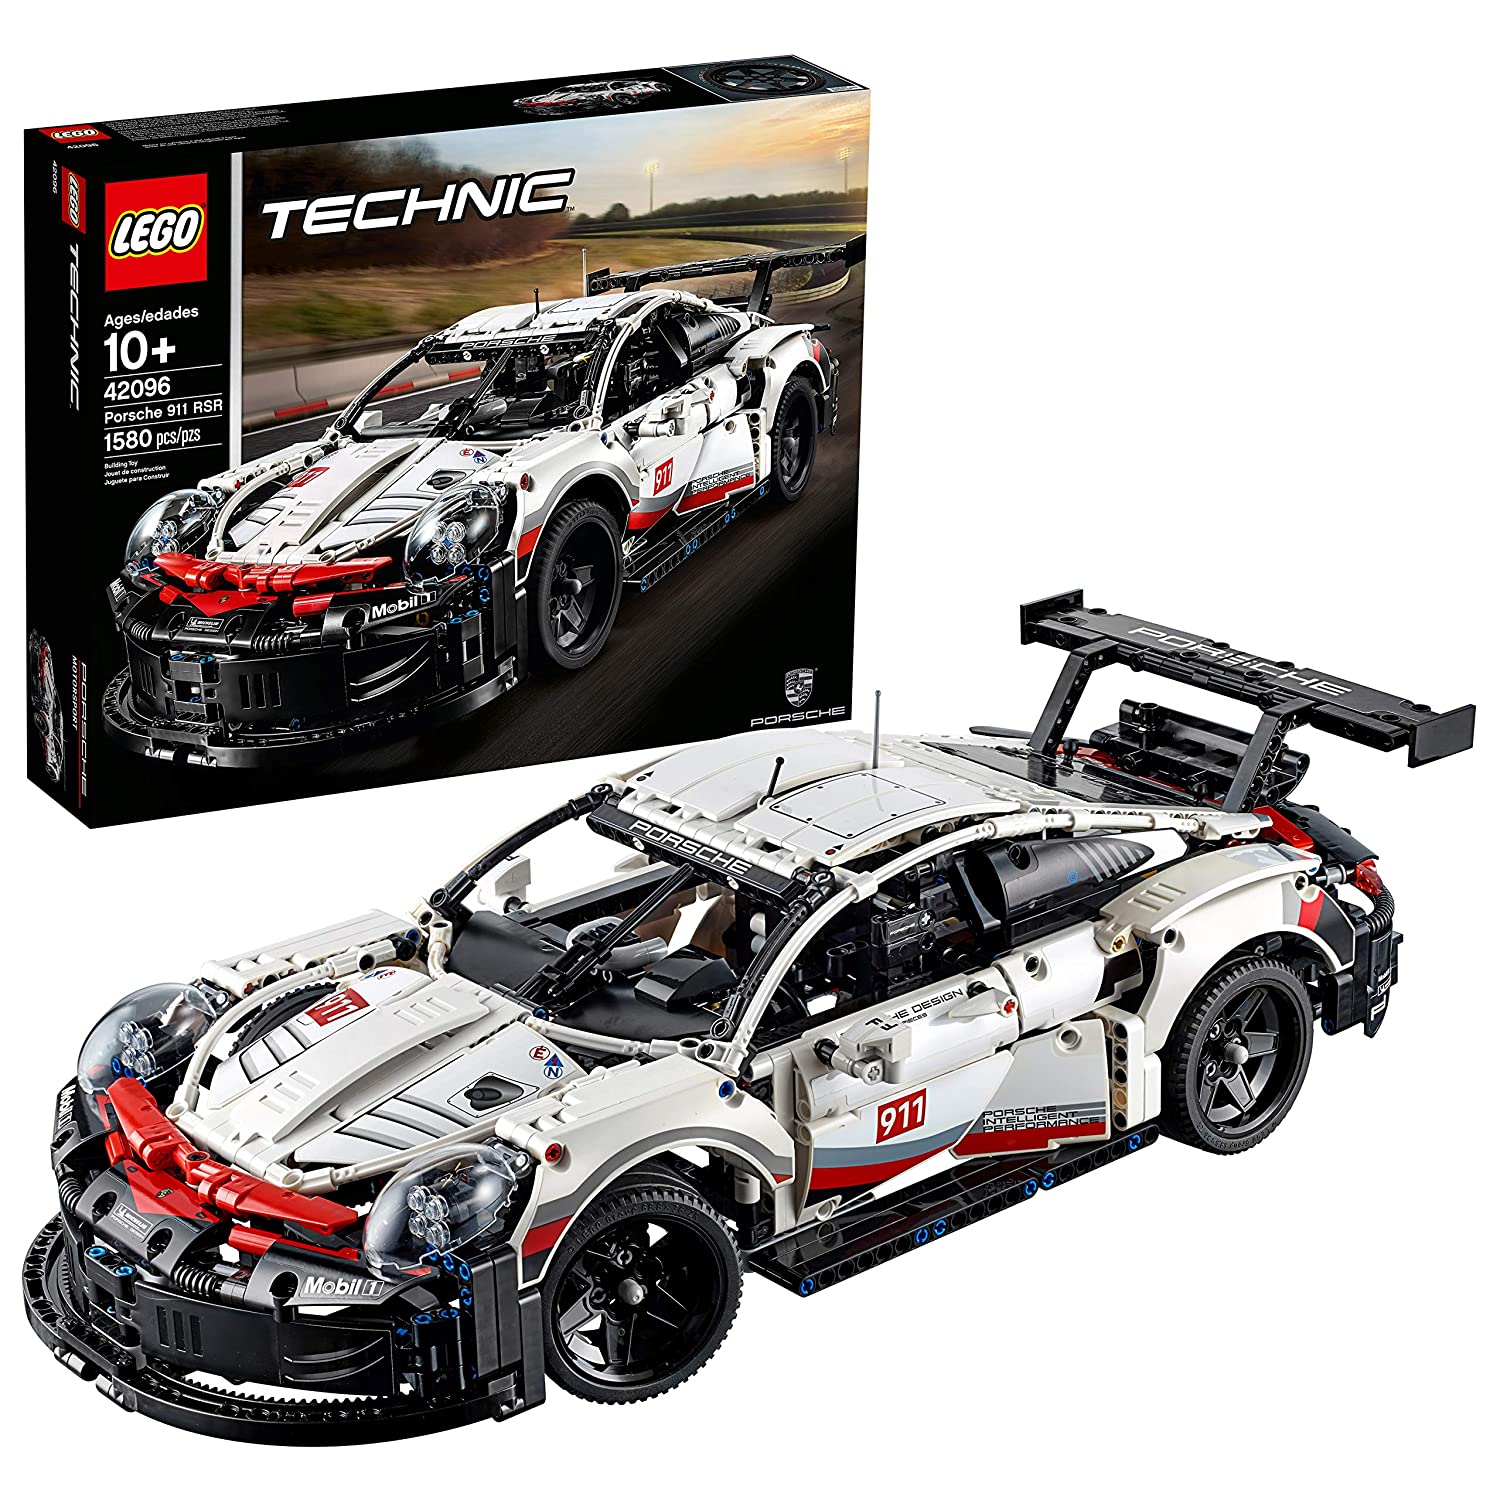 LEGO Technic Porsche 911 RSR 42096 Building Kit , New 2019